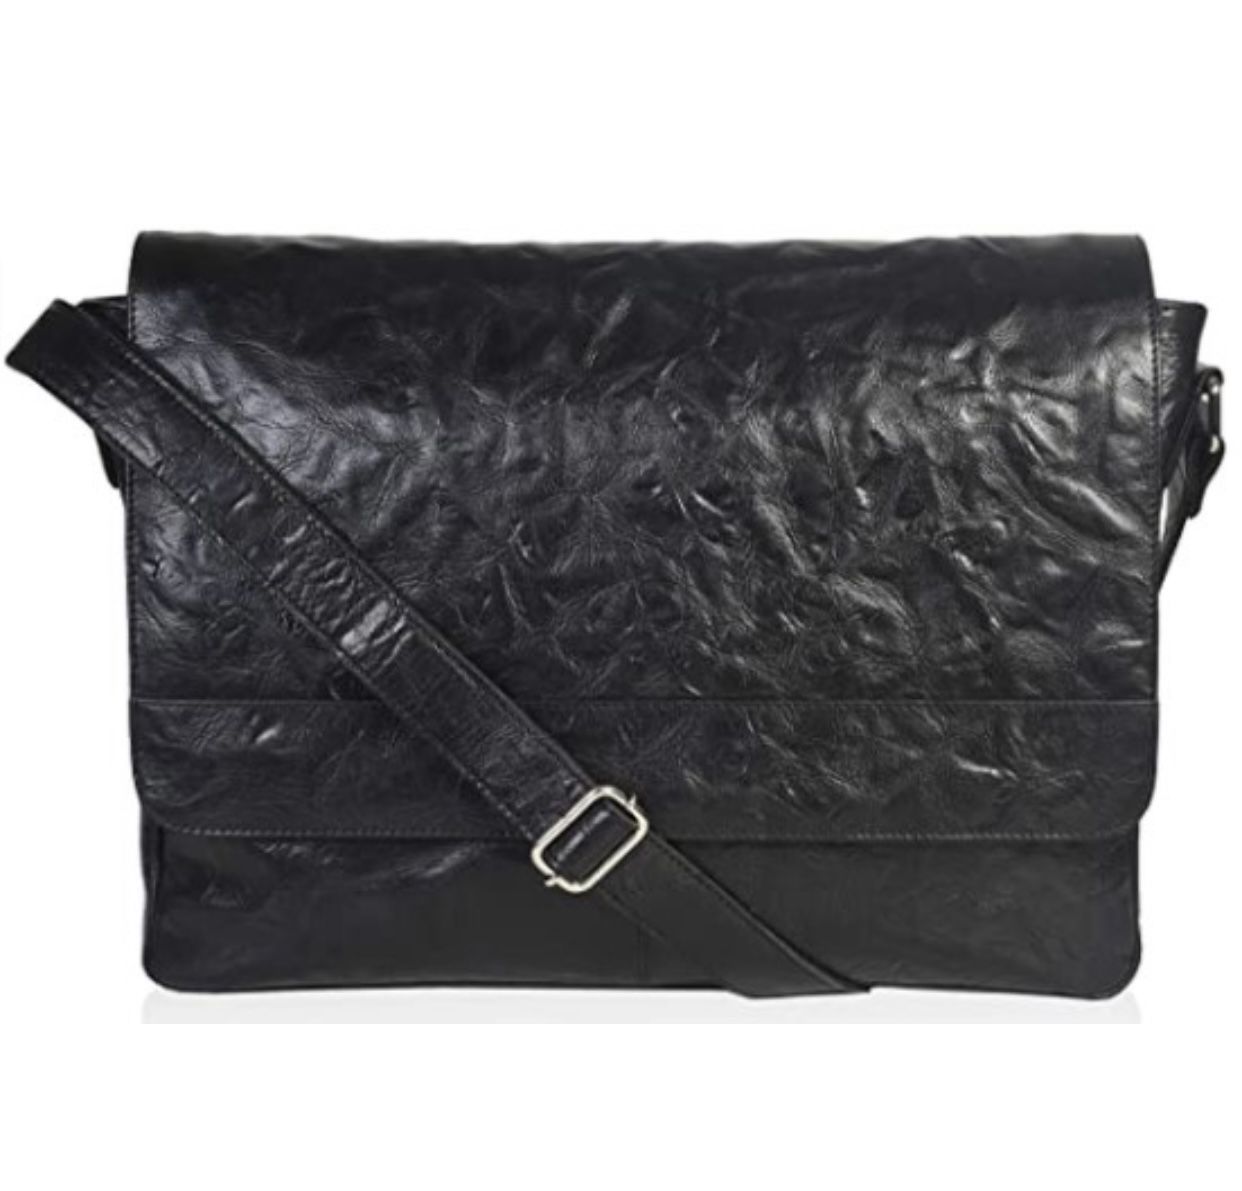 Unisex Genuine Leather Black 15” Messenger Bag -  Retro Designed Crumbled/Wrinkle Leather